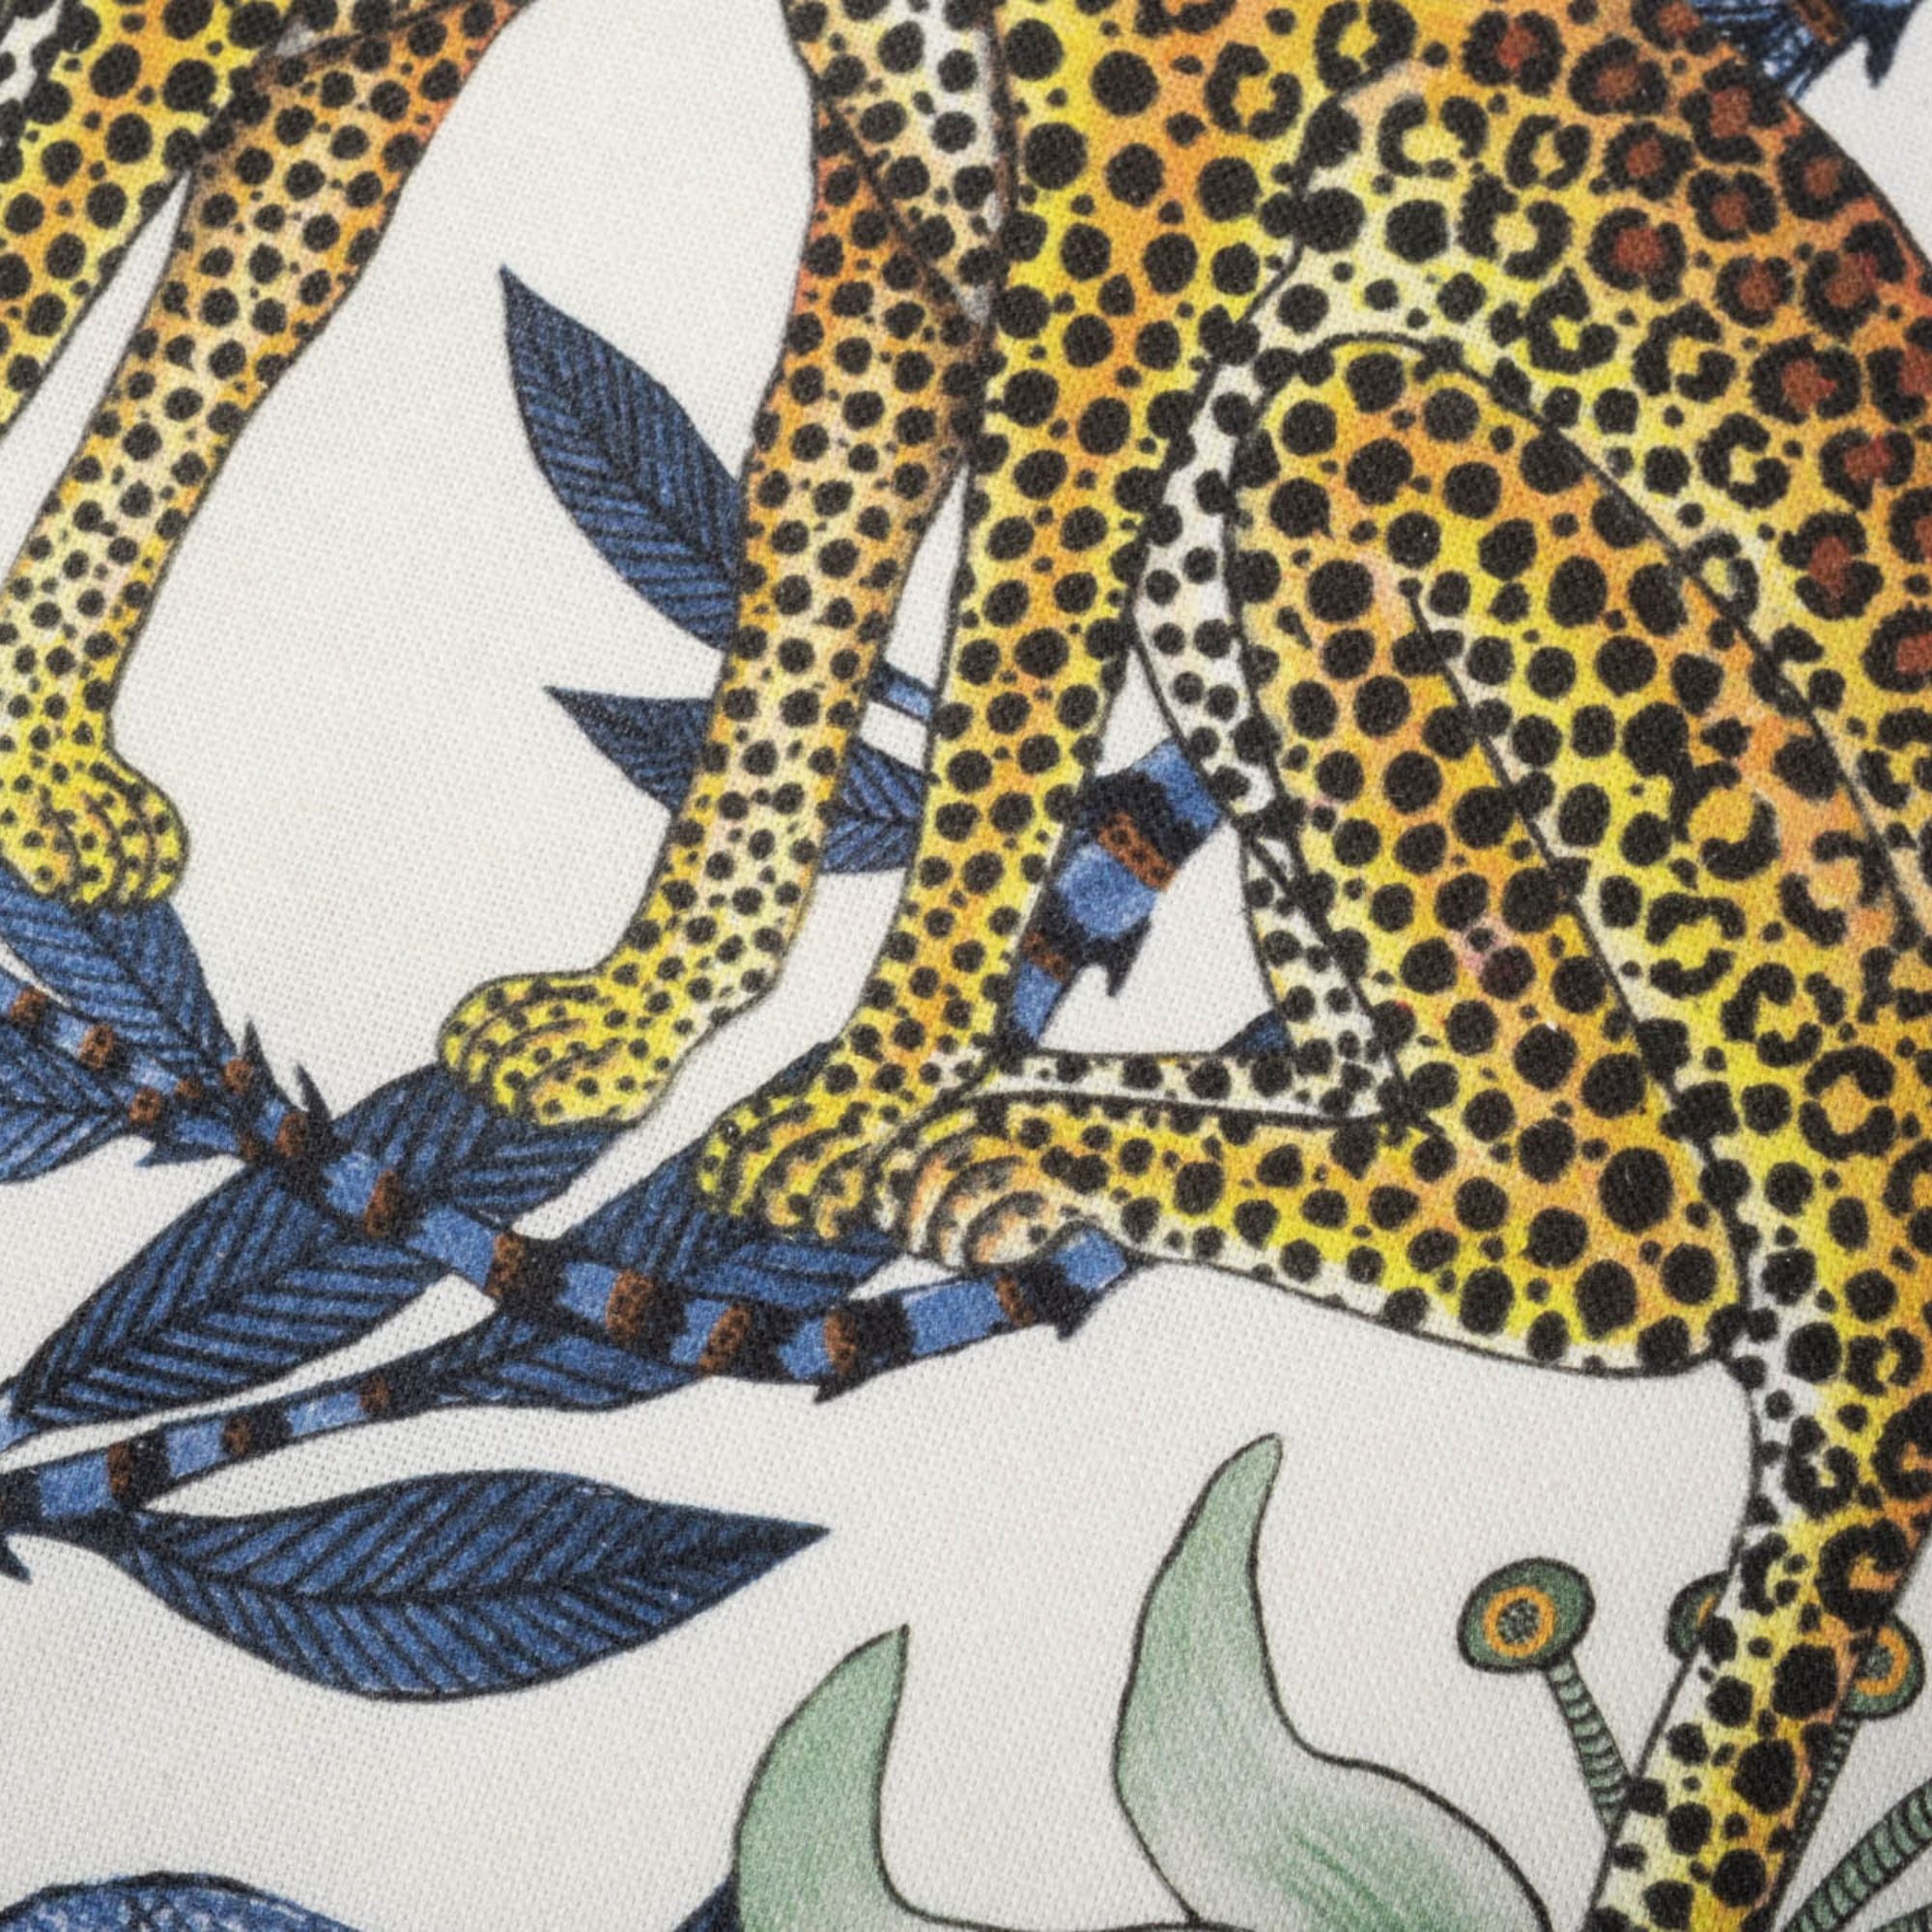 Lovebird Leopards Pillow - Cotton - Tanzanite